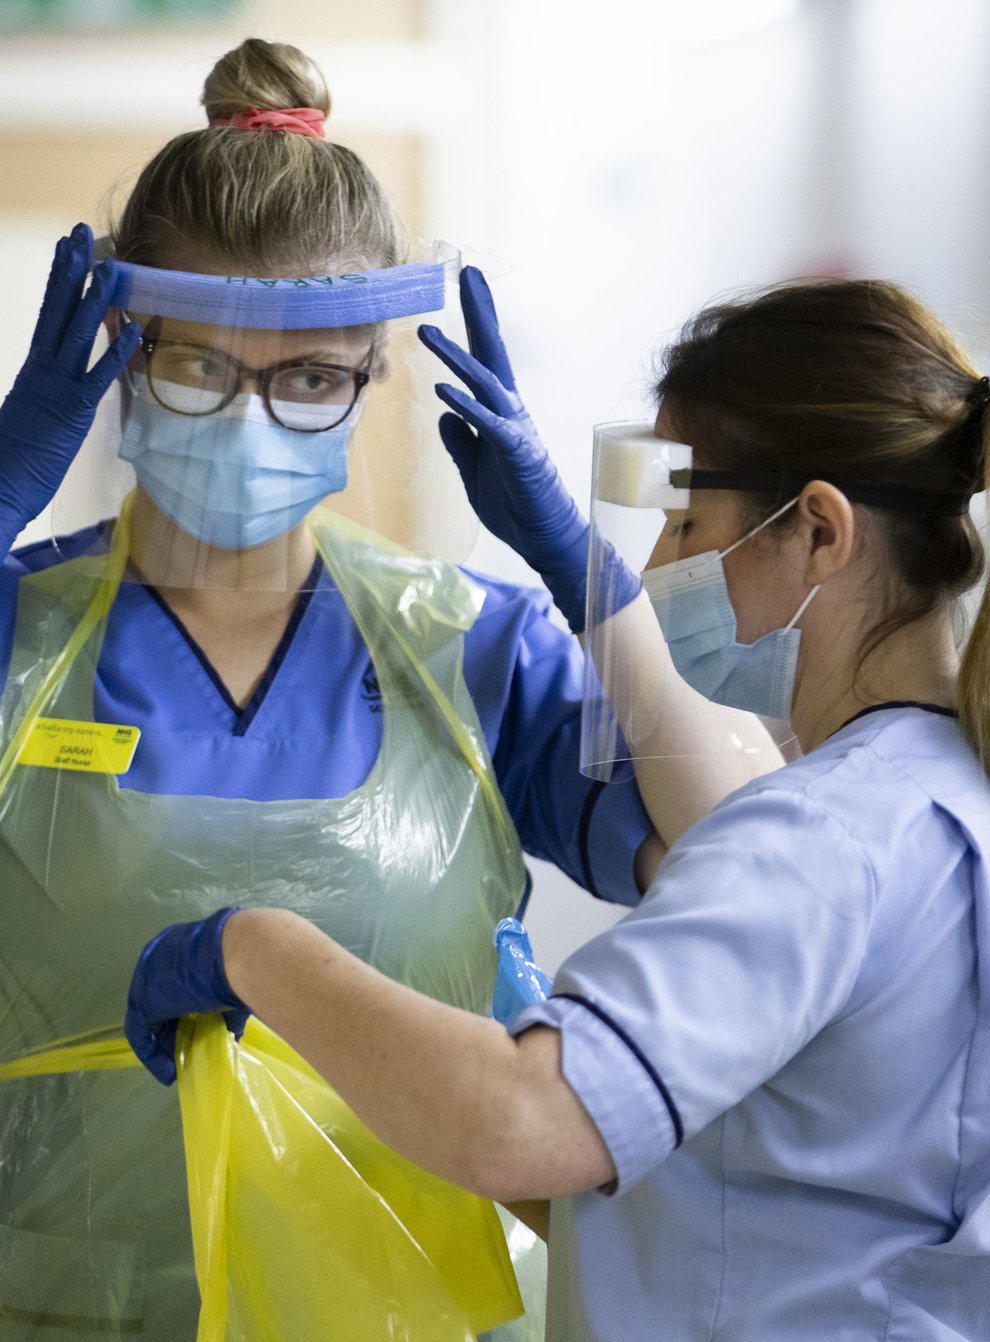 Nurses at work in PPE